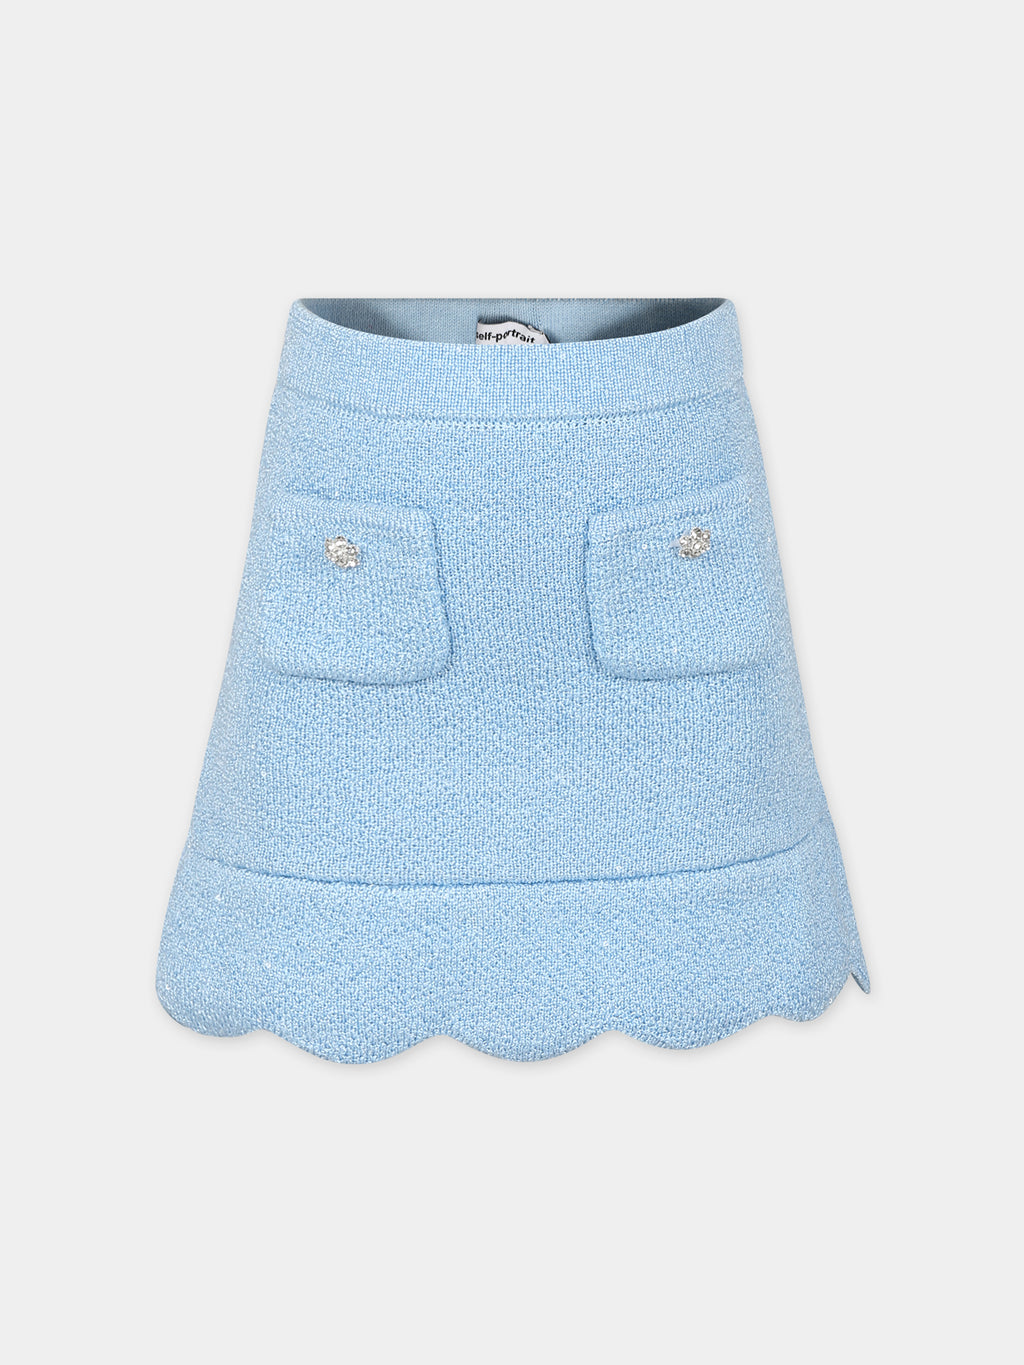 Elegant sky blue knit skirt for girl with sequins